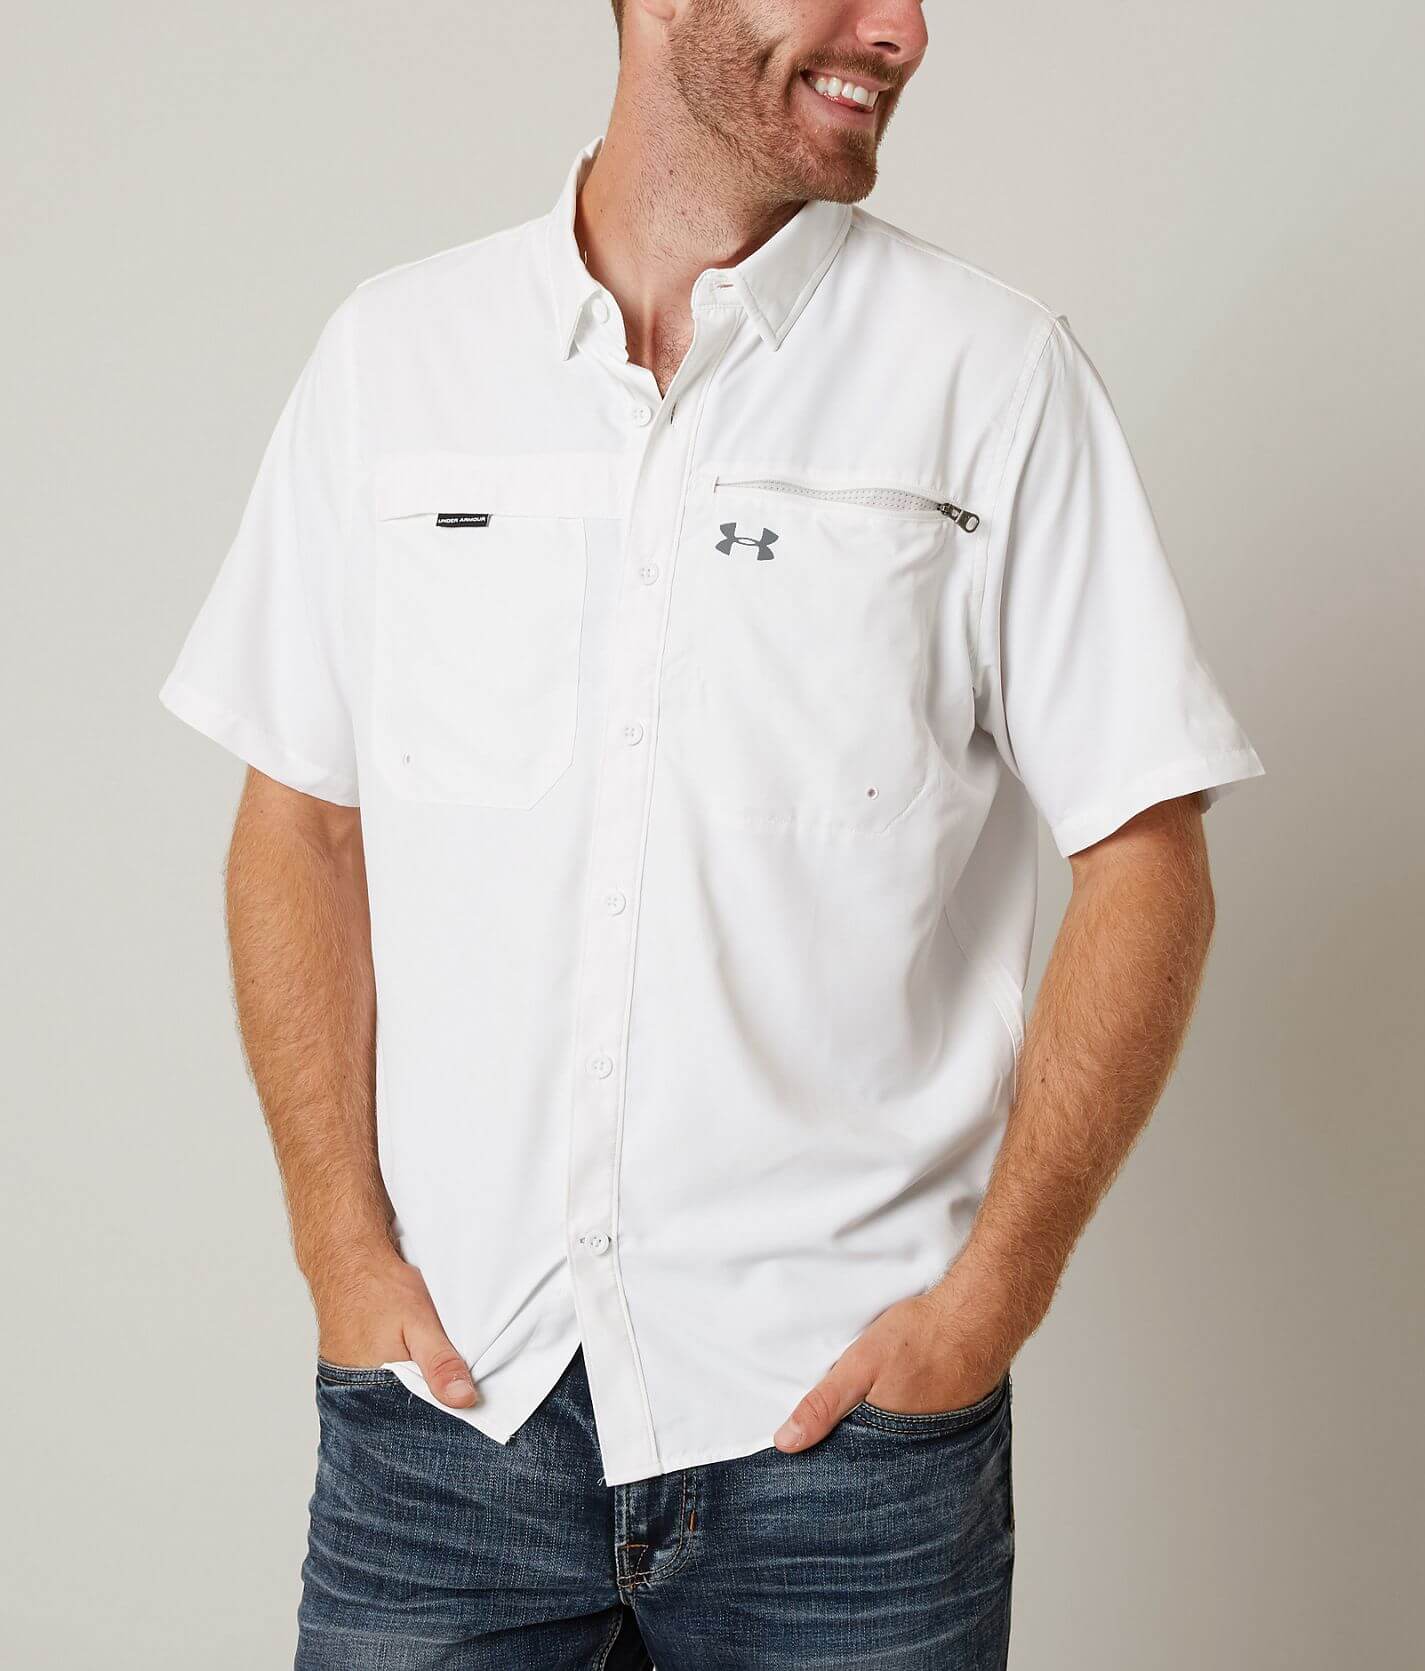 Under Armour® Fish Stalker Shirt - Men's Shirts in White